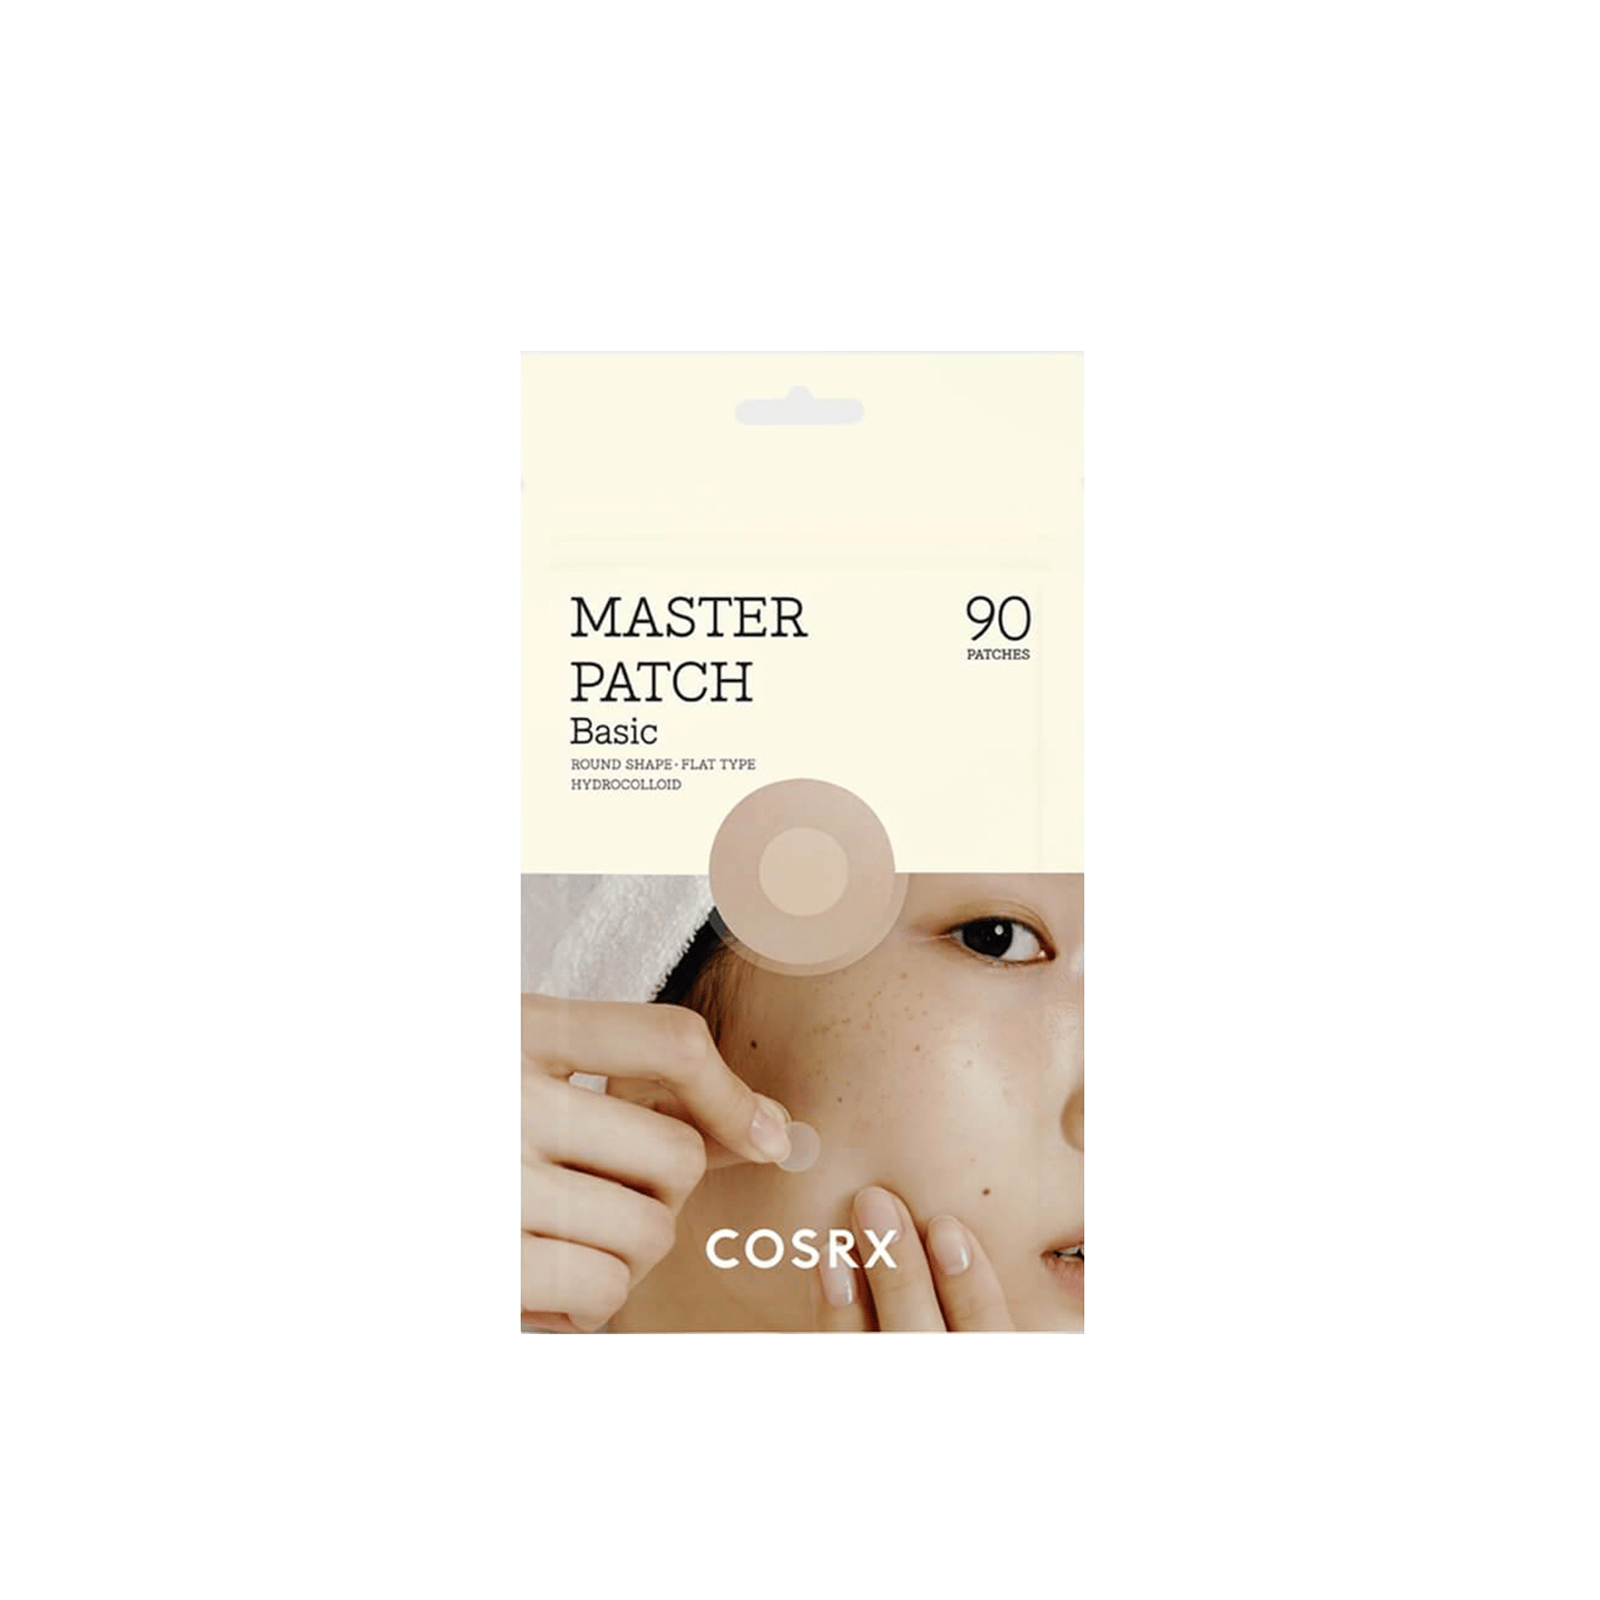 COSRX Master Patch Basic x90